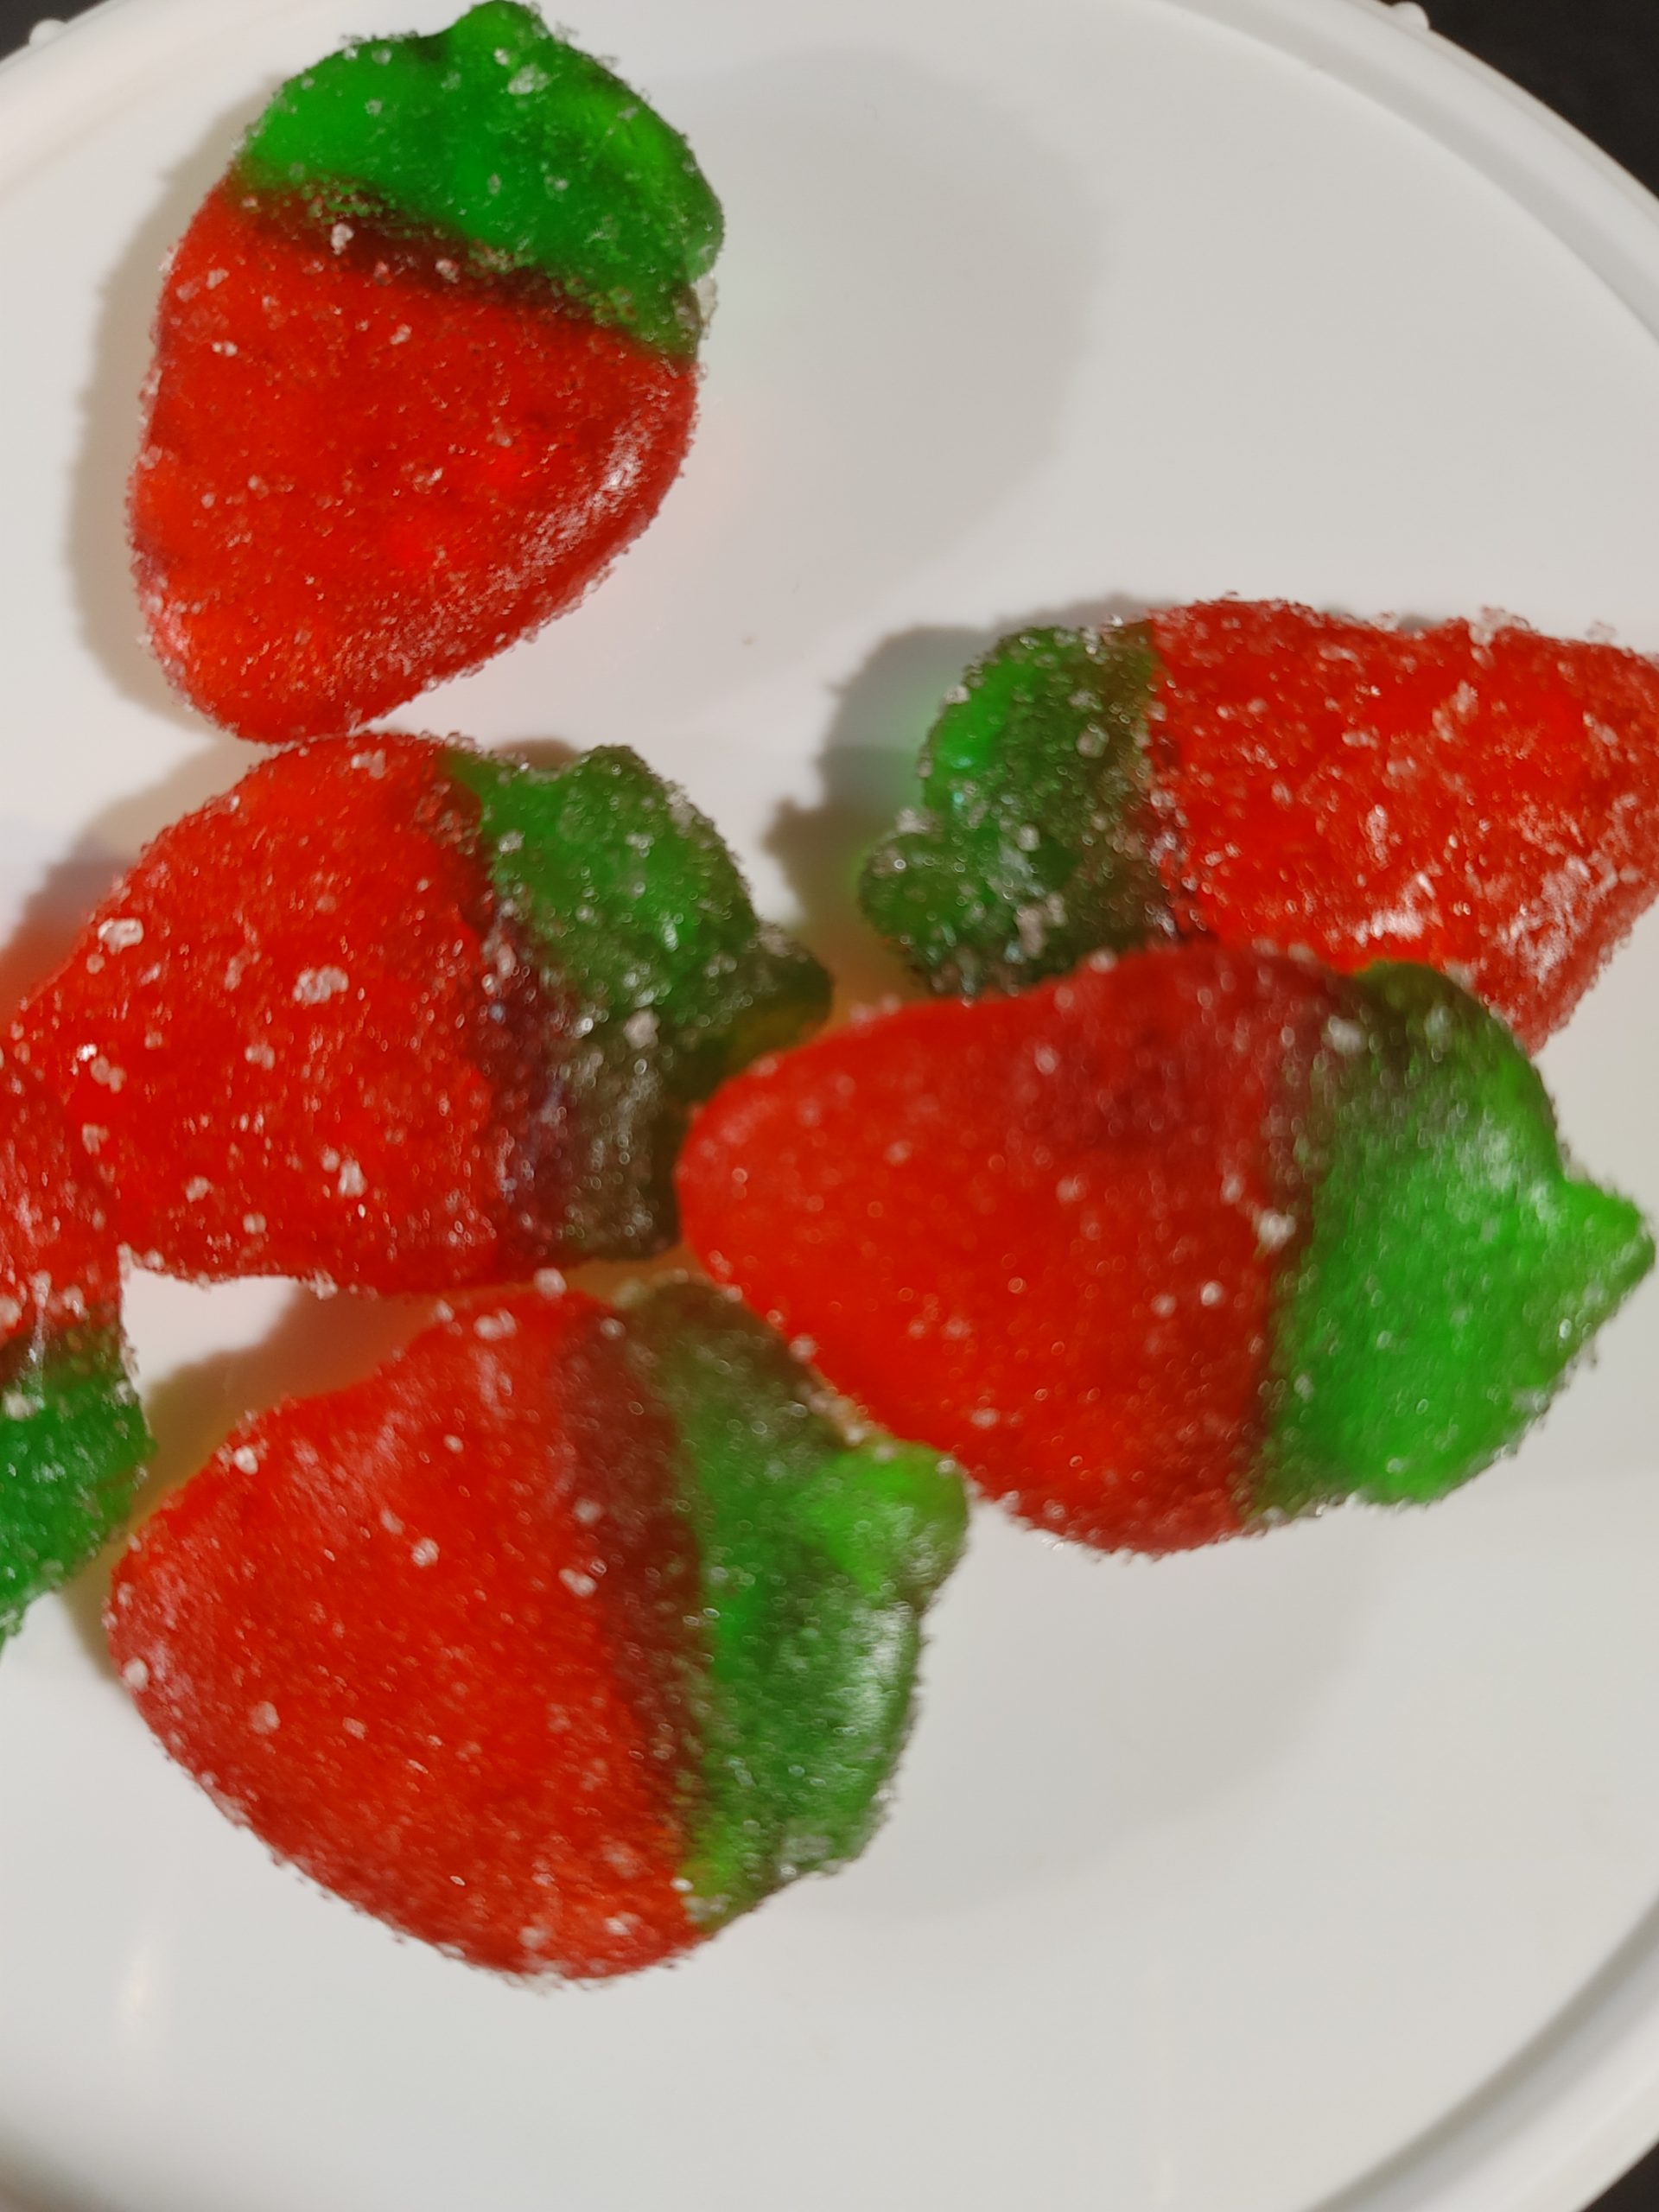 50mg Strawberry Gummies